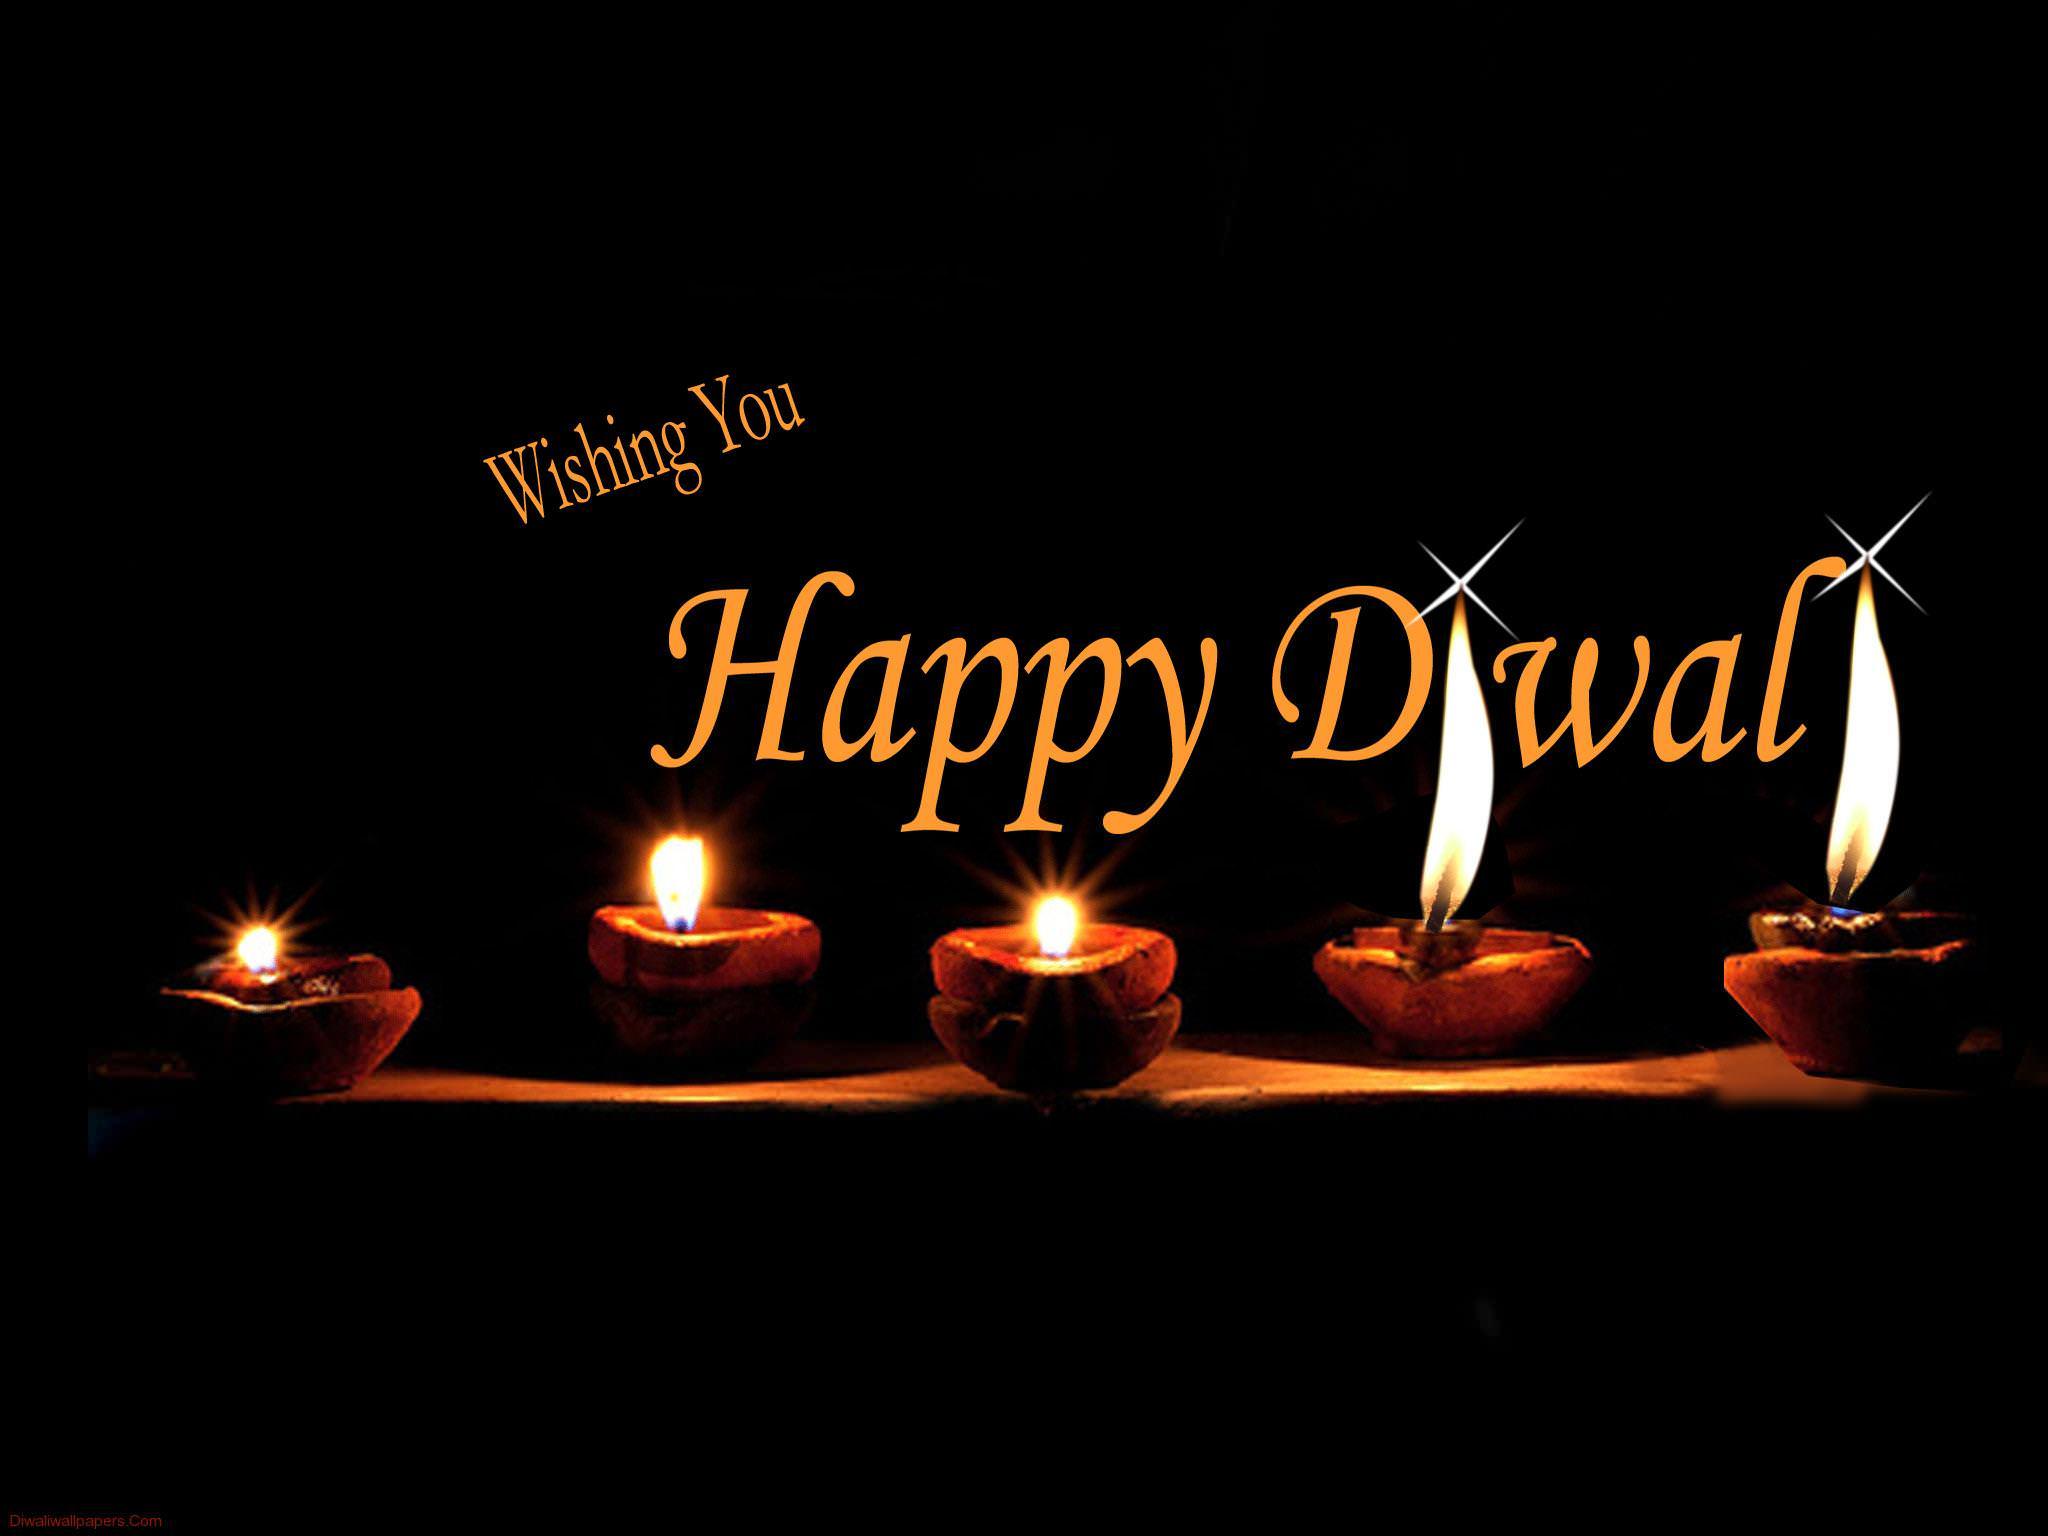 Happy Diwali Images | 1500+ Deepavali Images | Sanjay Jangam